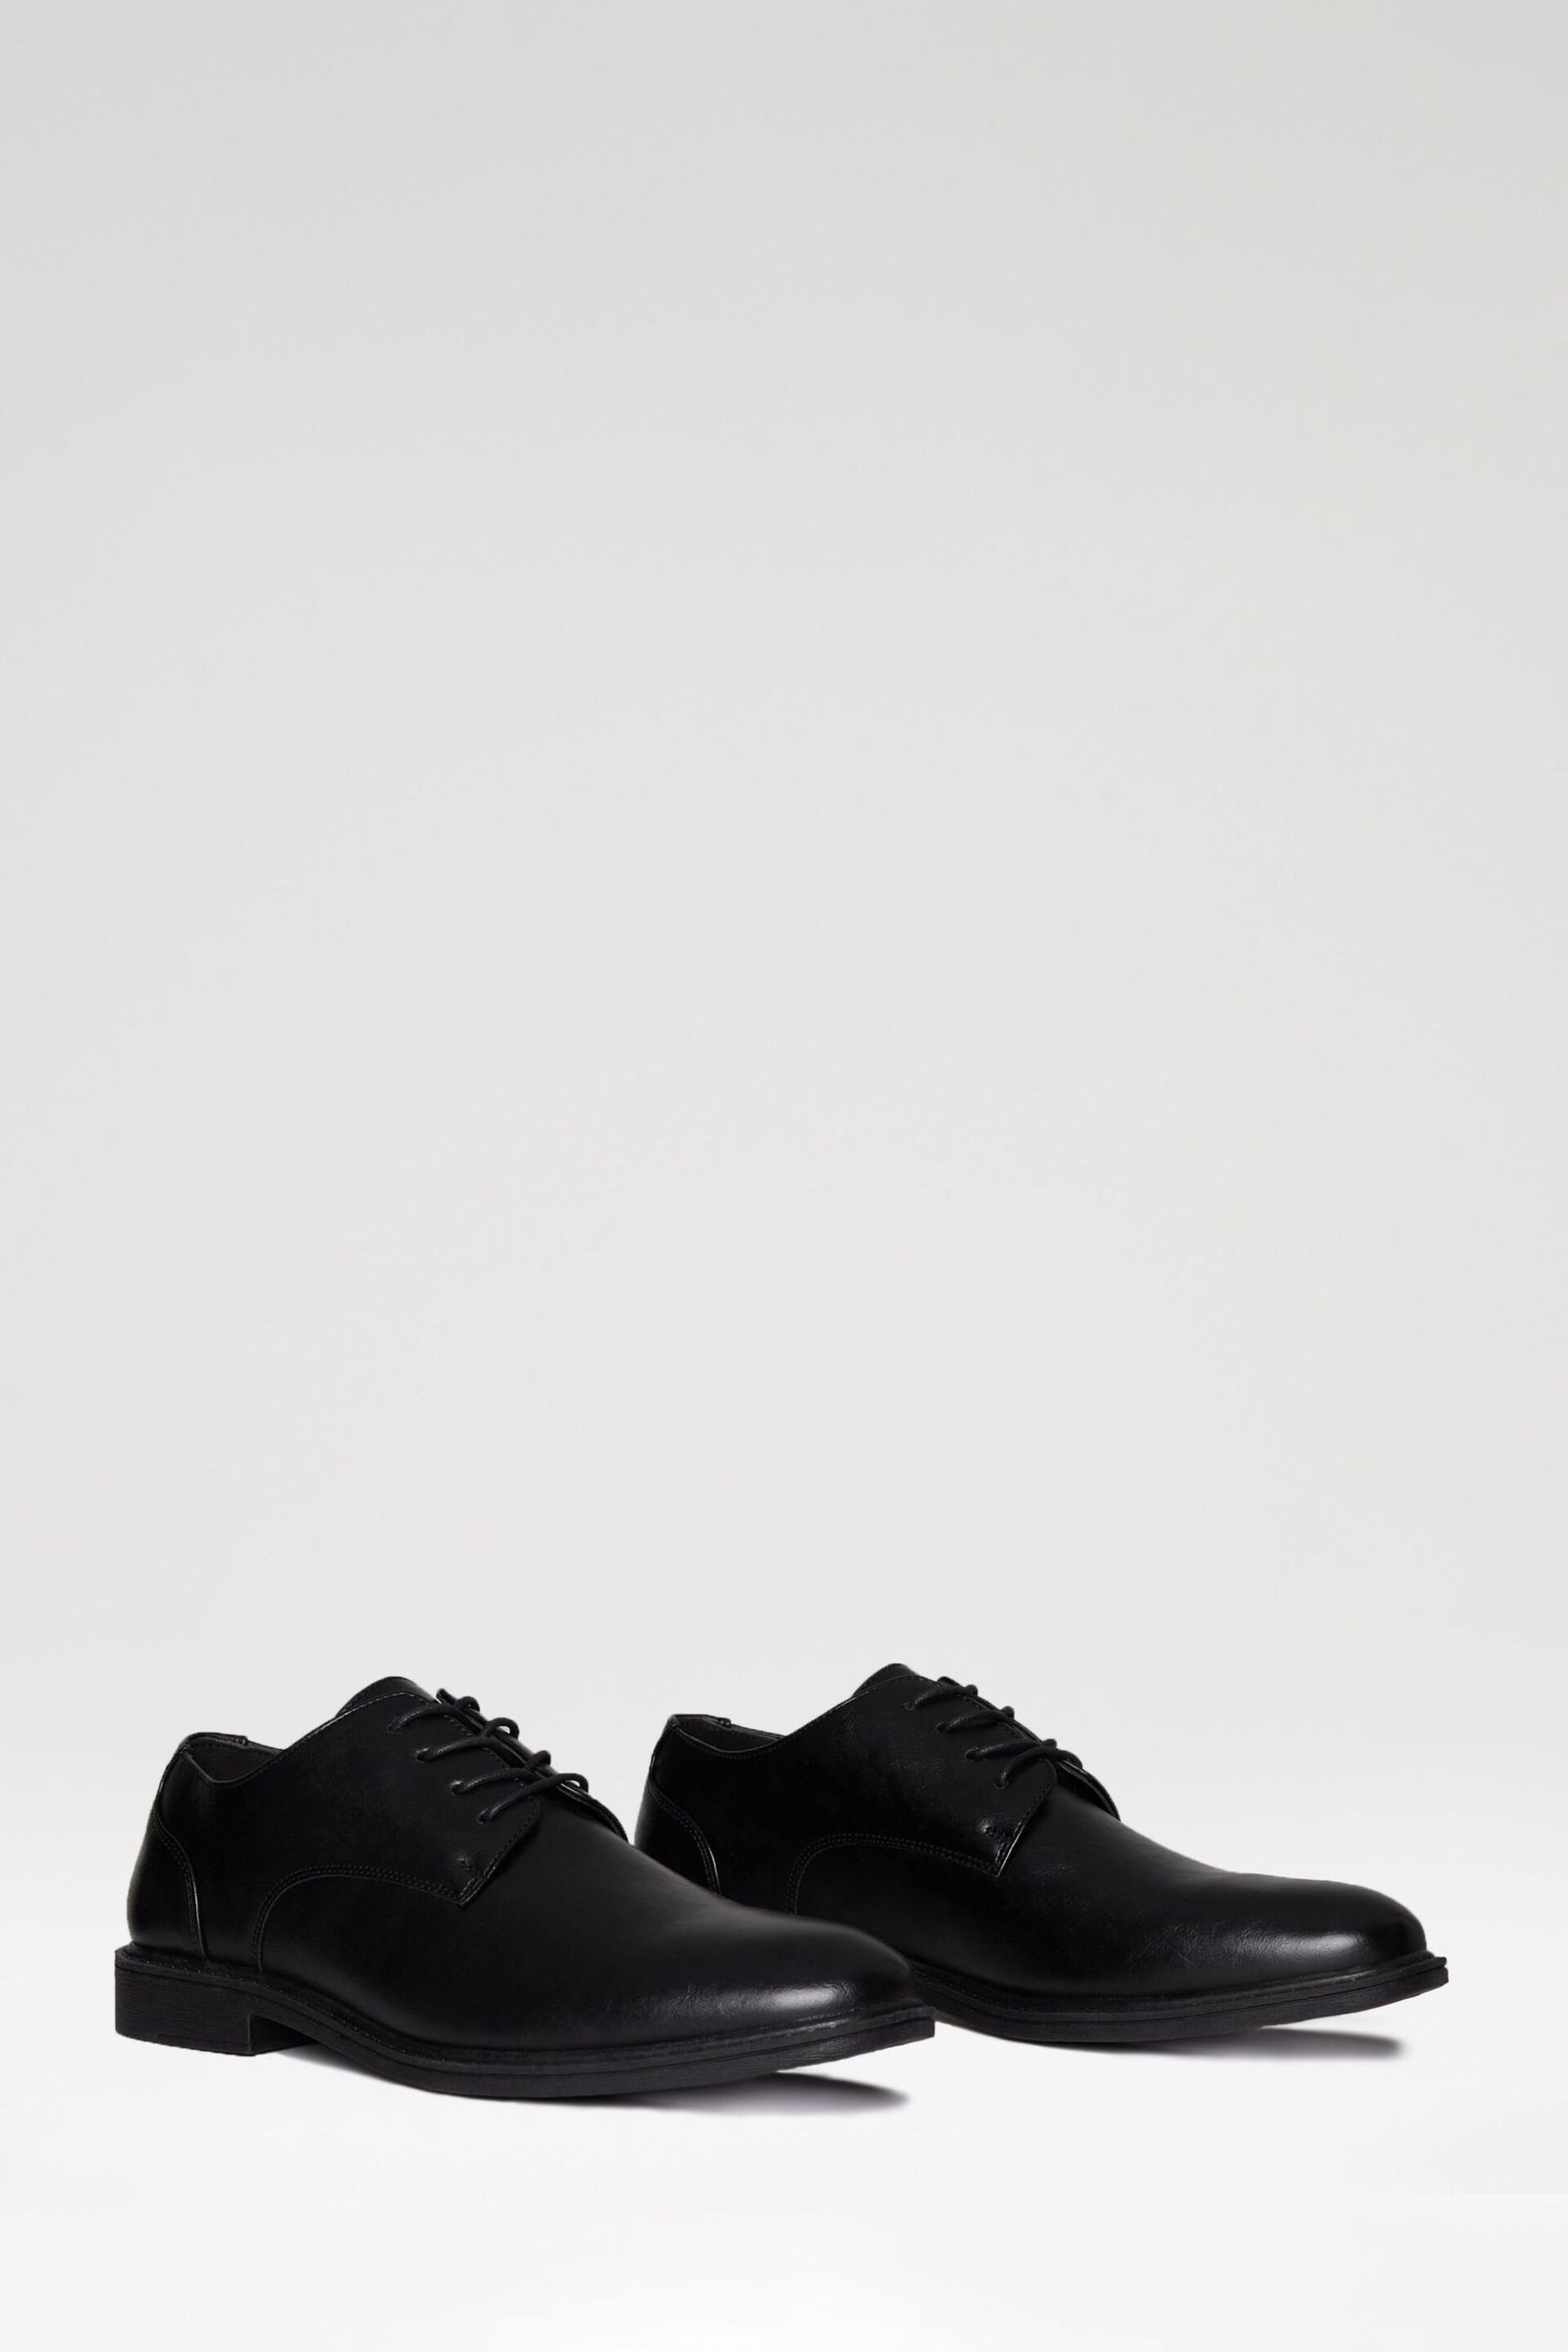 Threadbare Black Smart Derby Shoes - Image 2 of 4